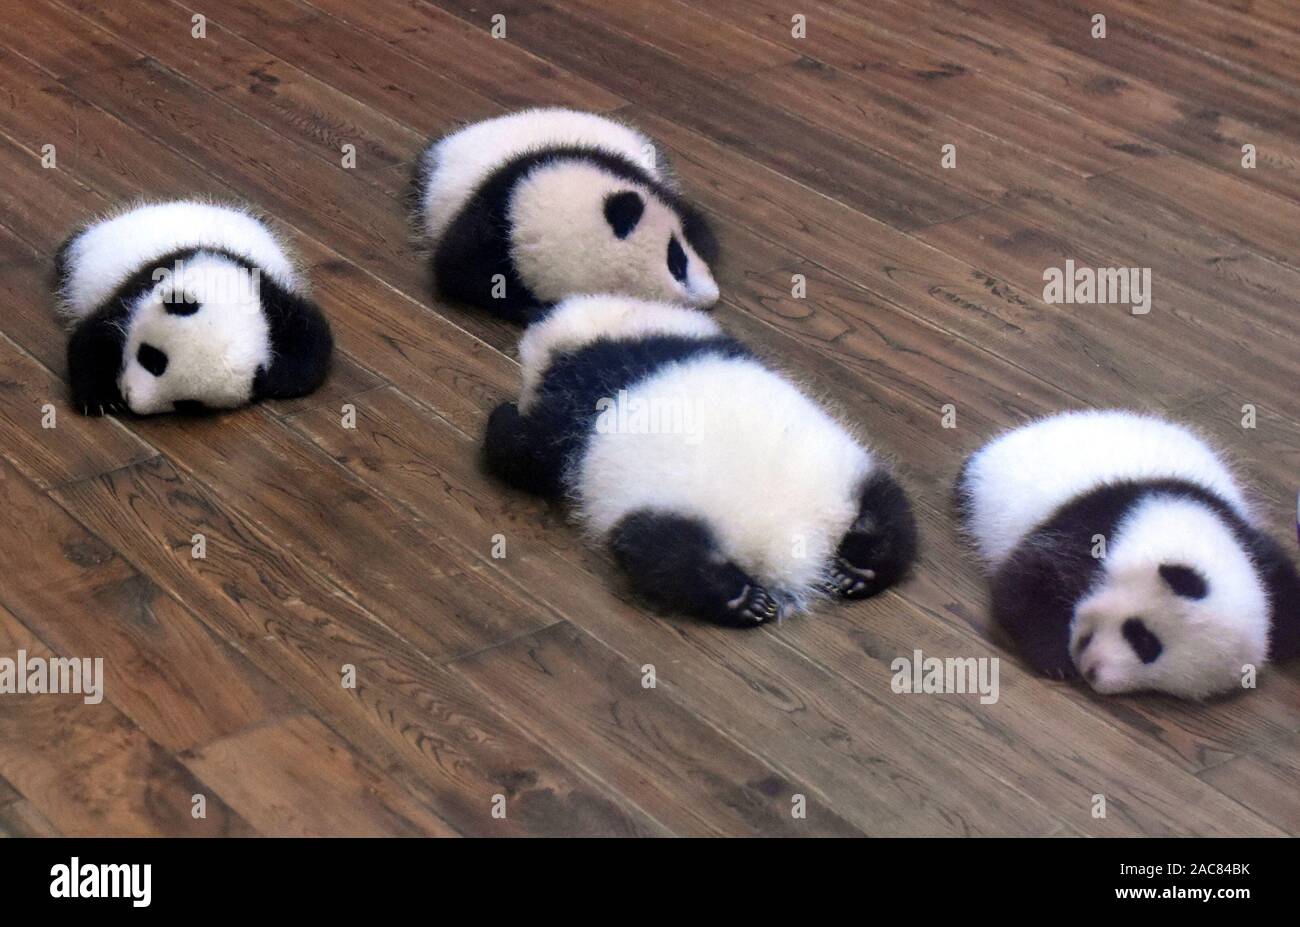 Panda bear baby hi-res stock photography and images - Alamy